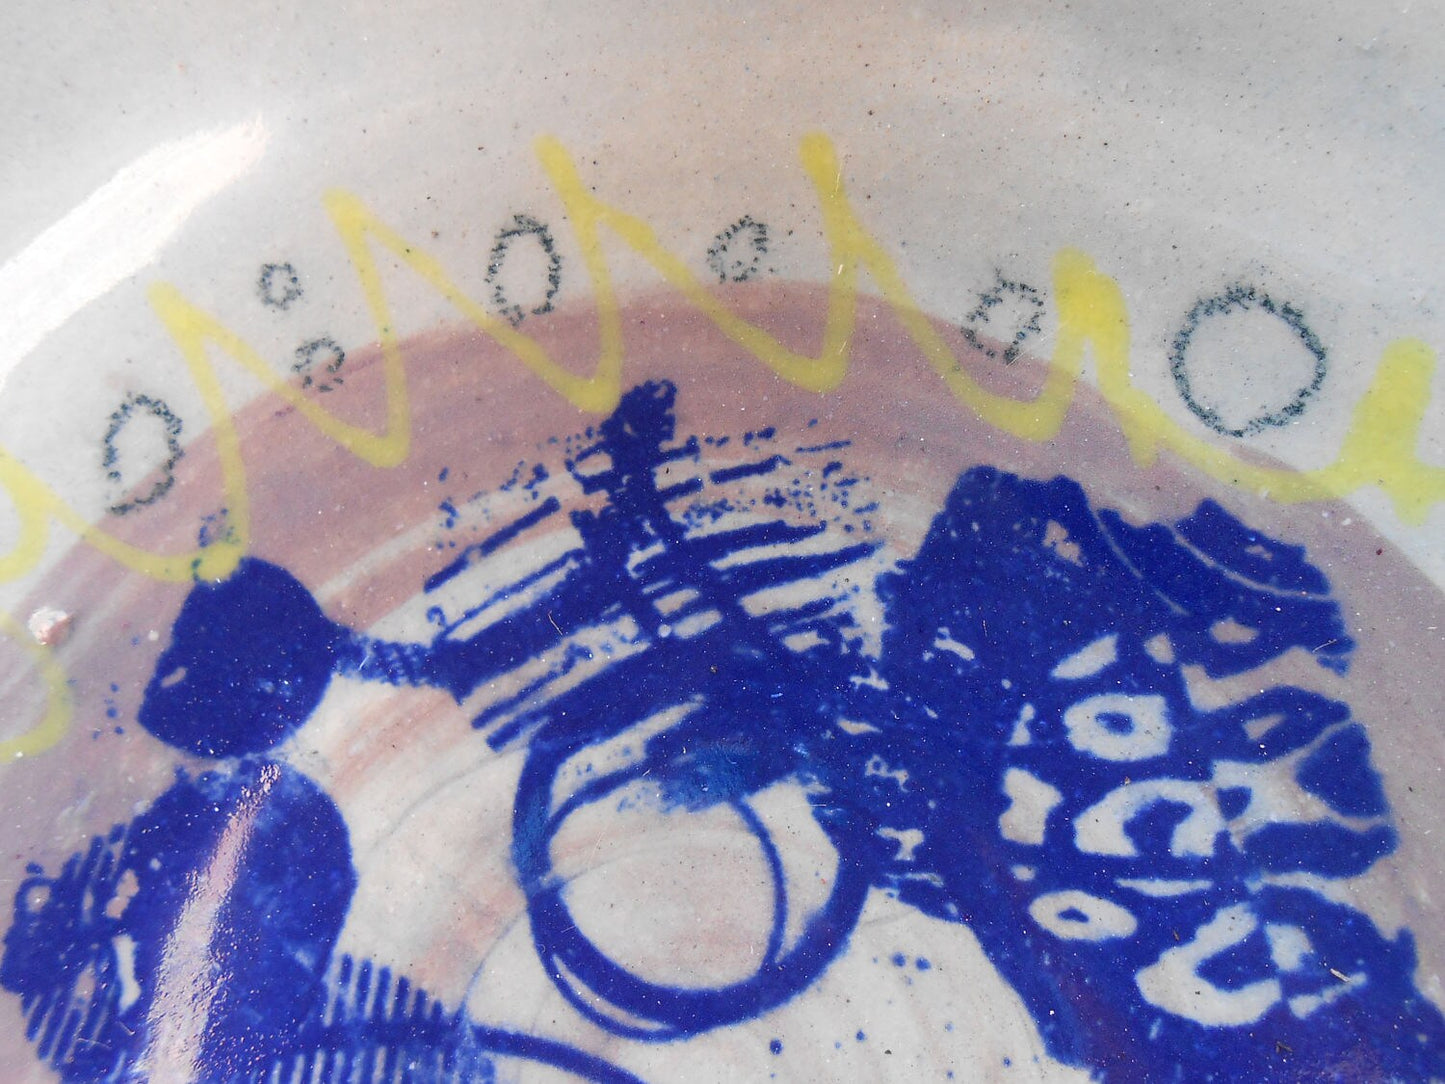 Circles on Circles Thrown Ceramic Pottery Bowl